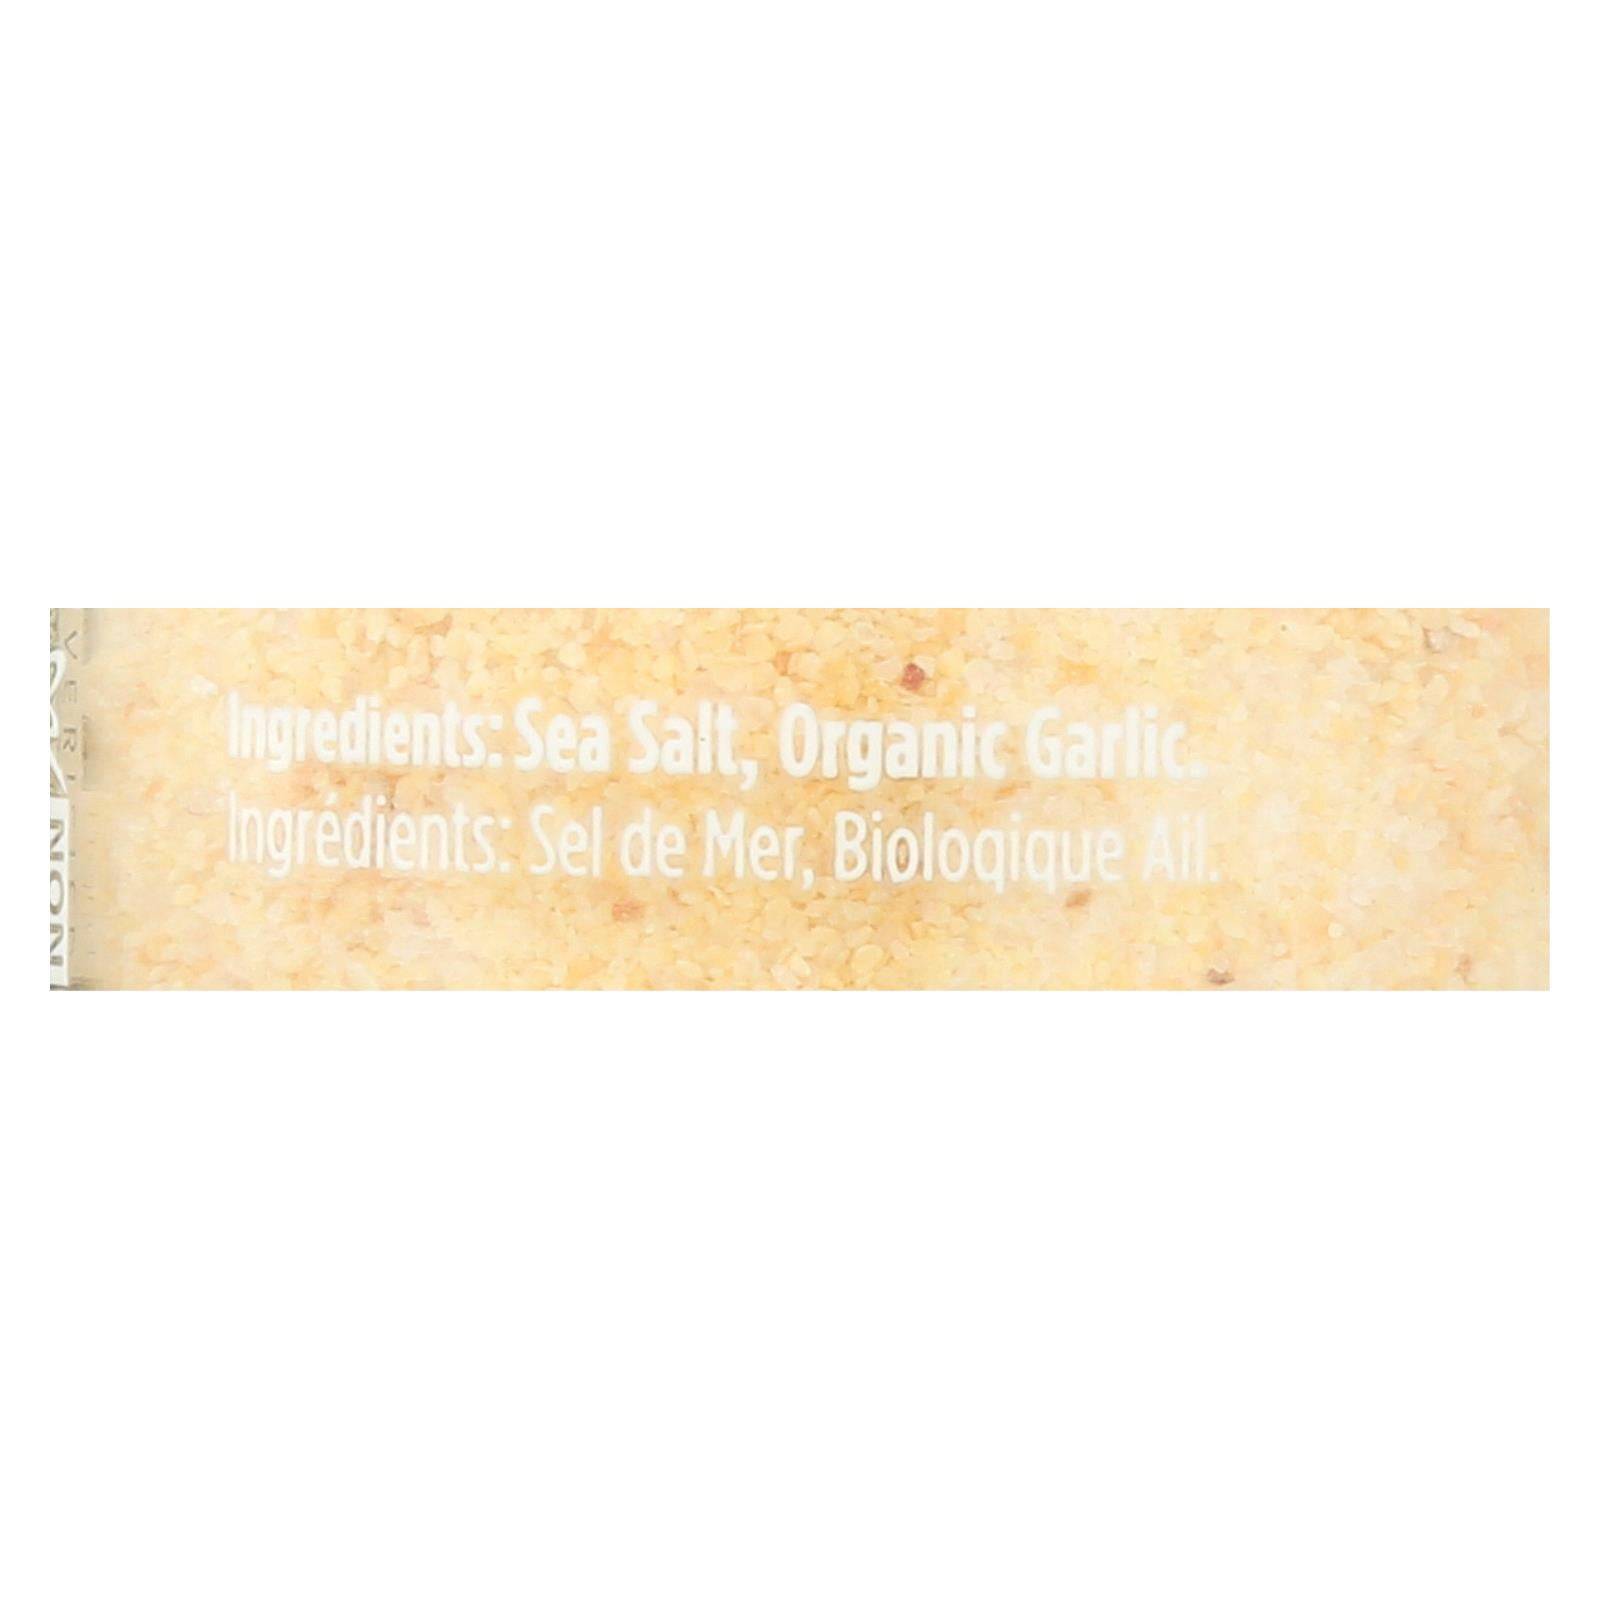 Spicely Organics - Organic Garlic - Seasoning - Case Of 3 - 3.4 Oz. | OnlyNaturals.us